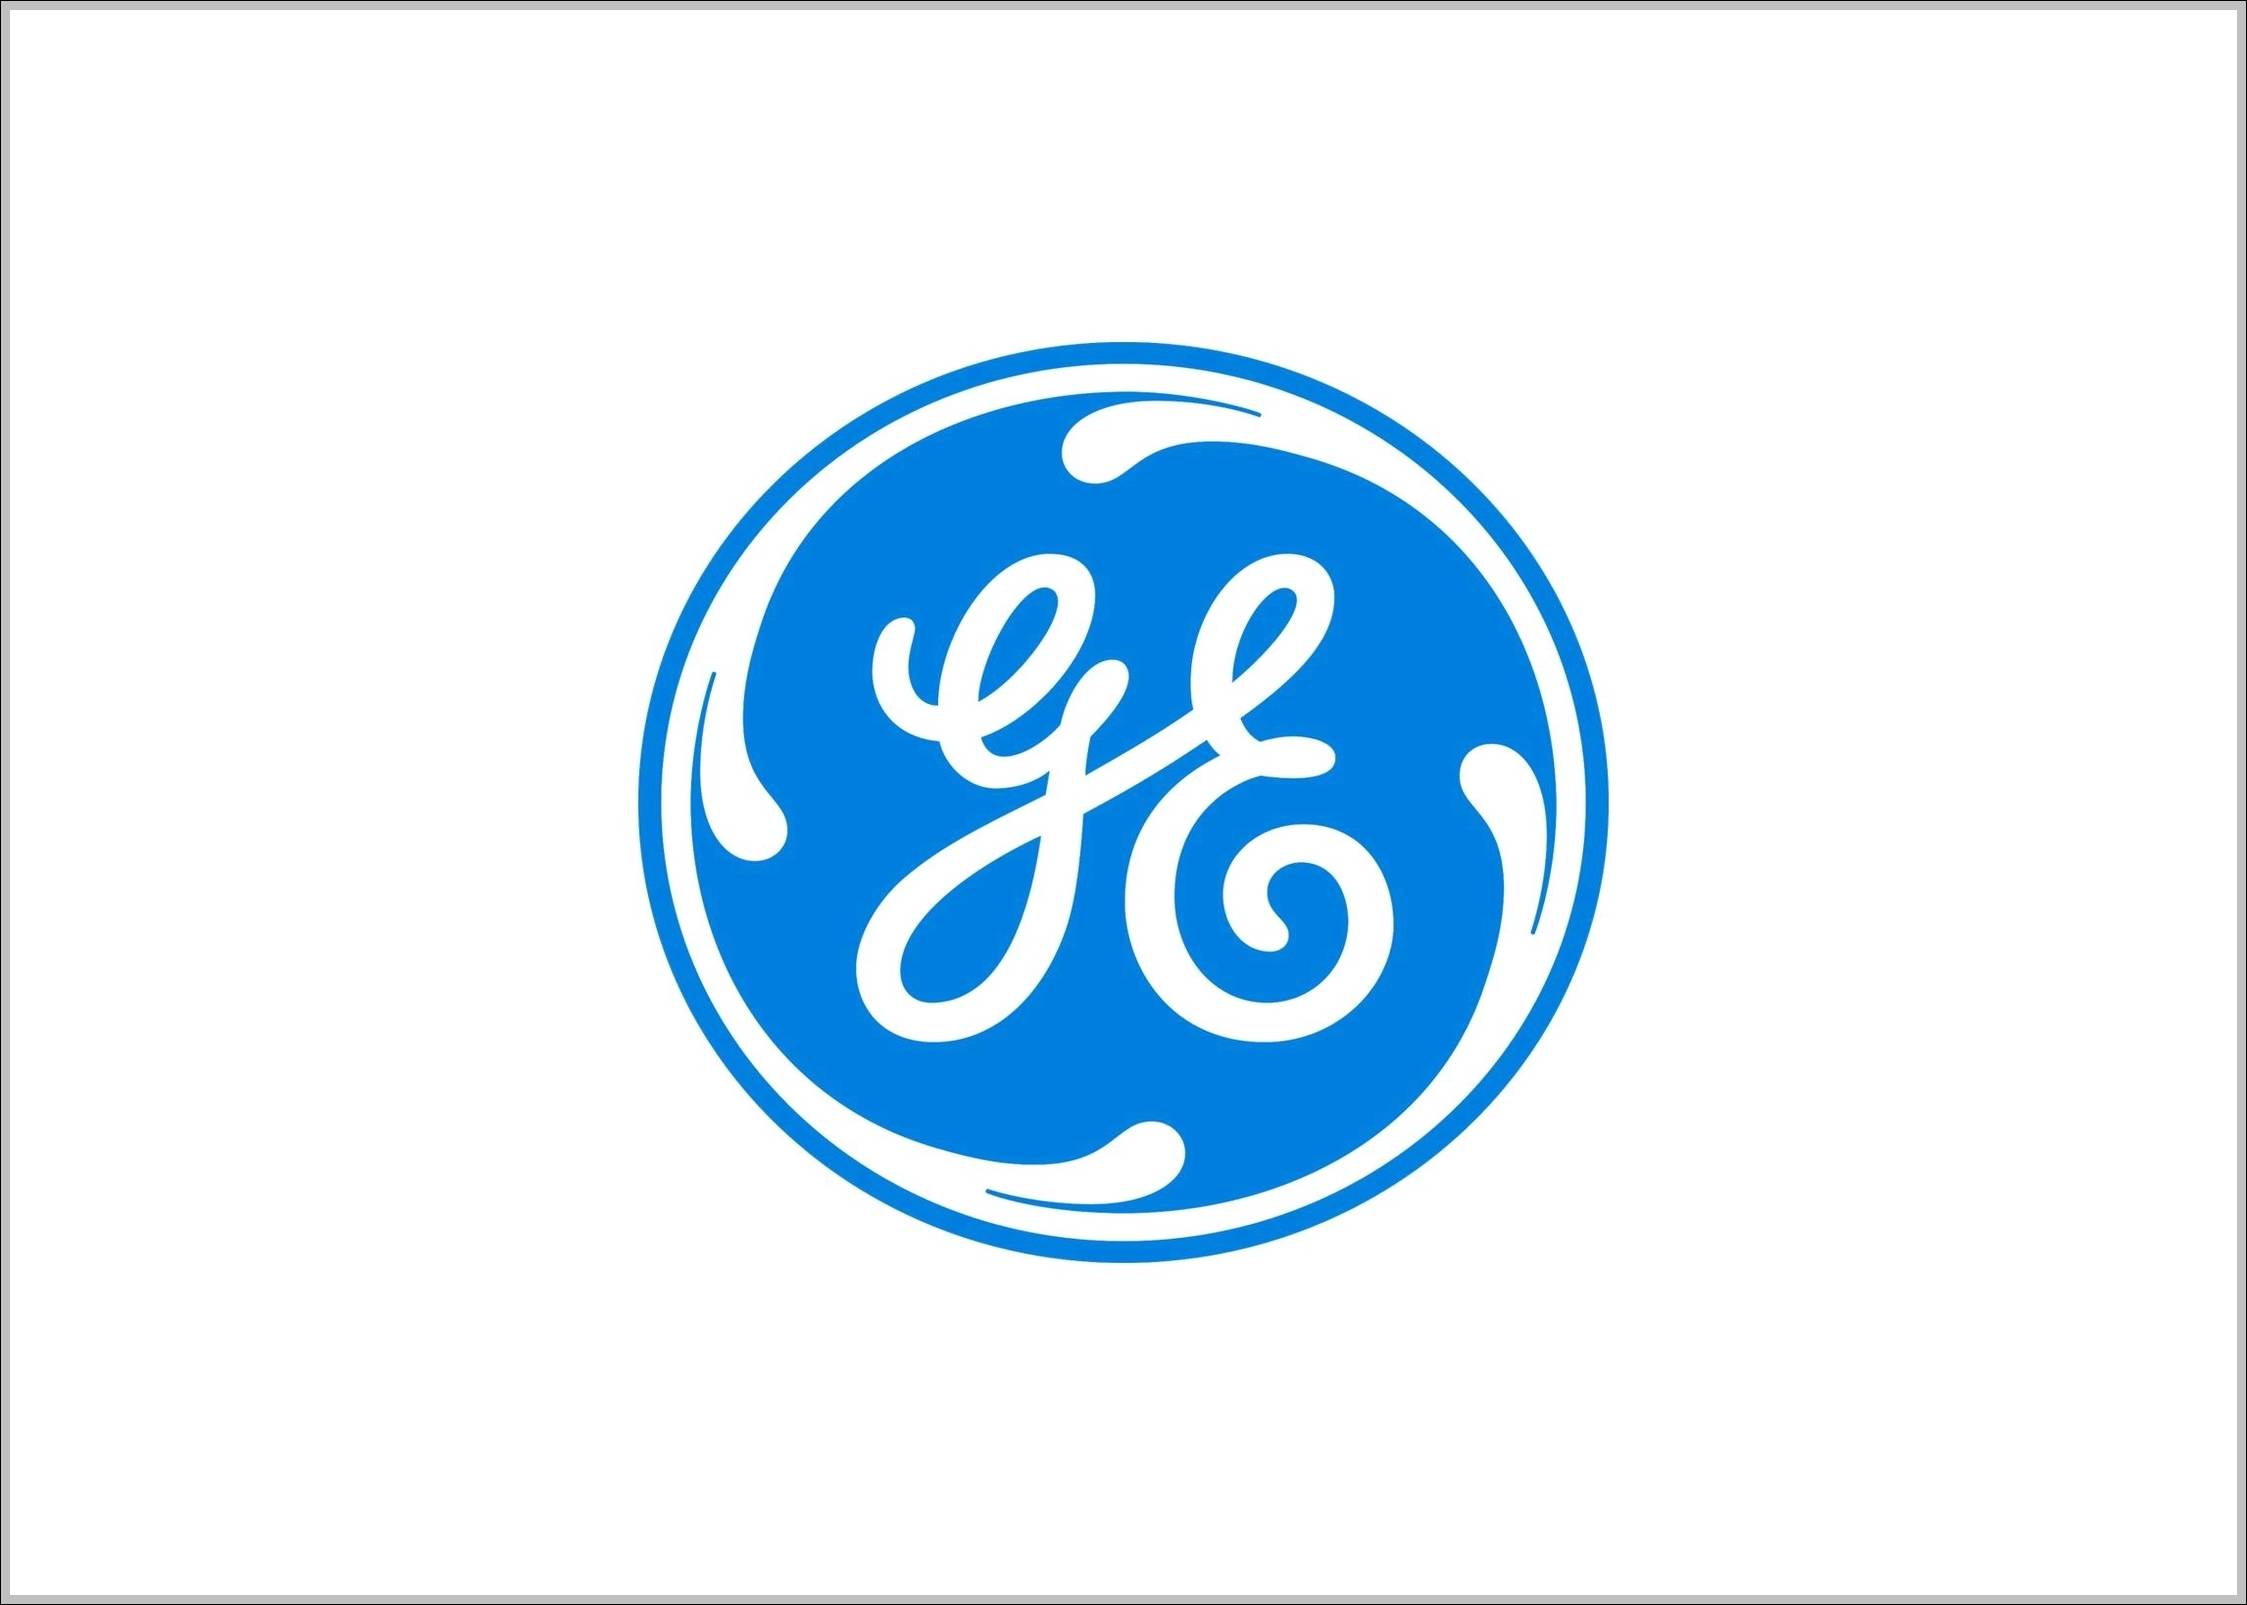 General Electric GE logo